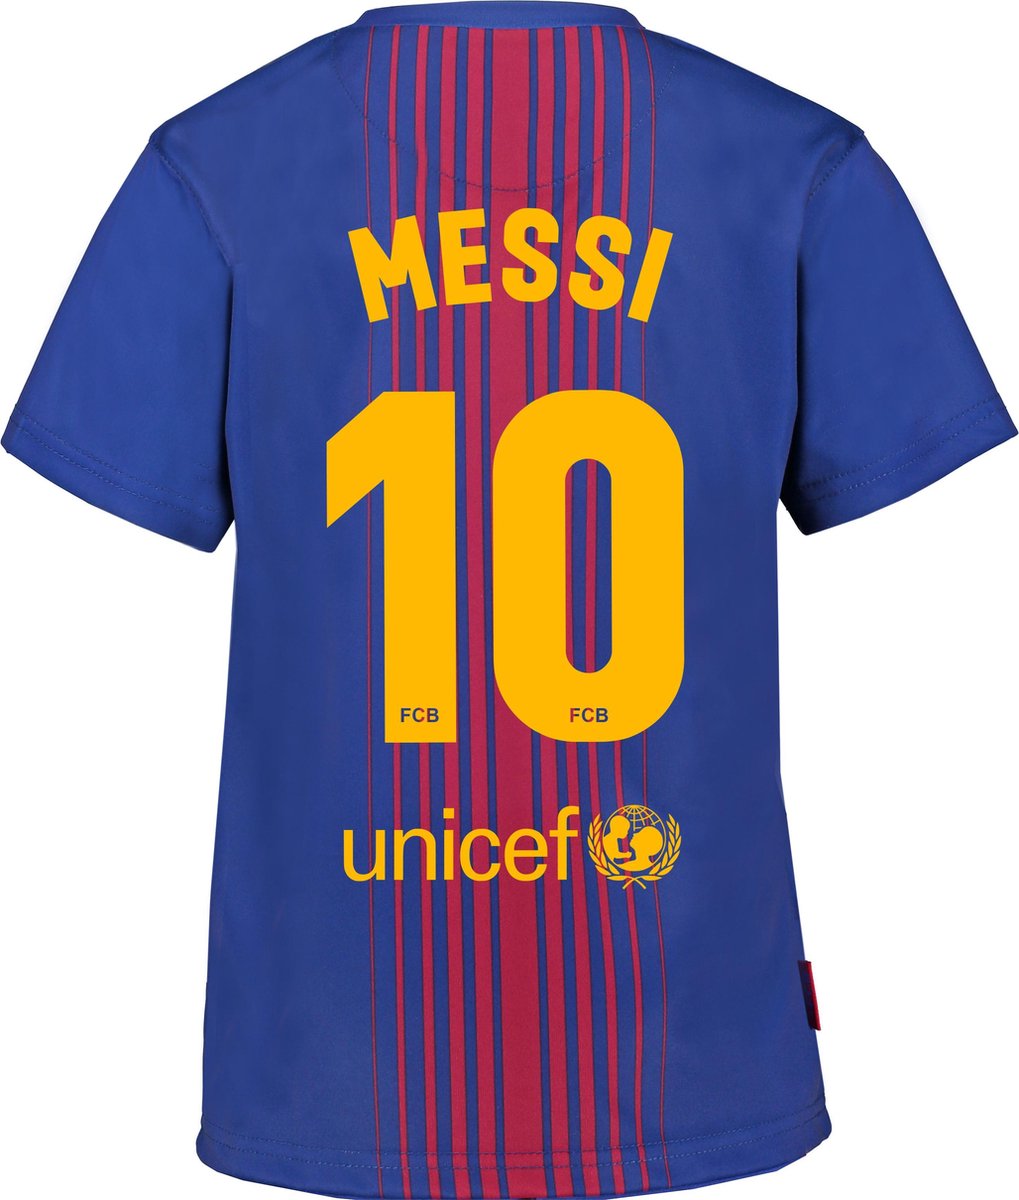 Interpunctie spion meer FC Barcelona Messi shirt | bol.com